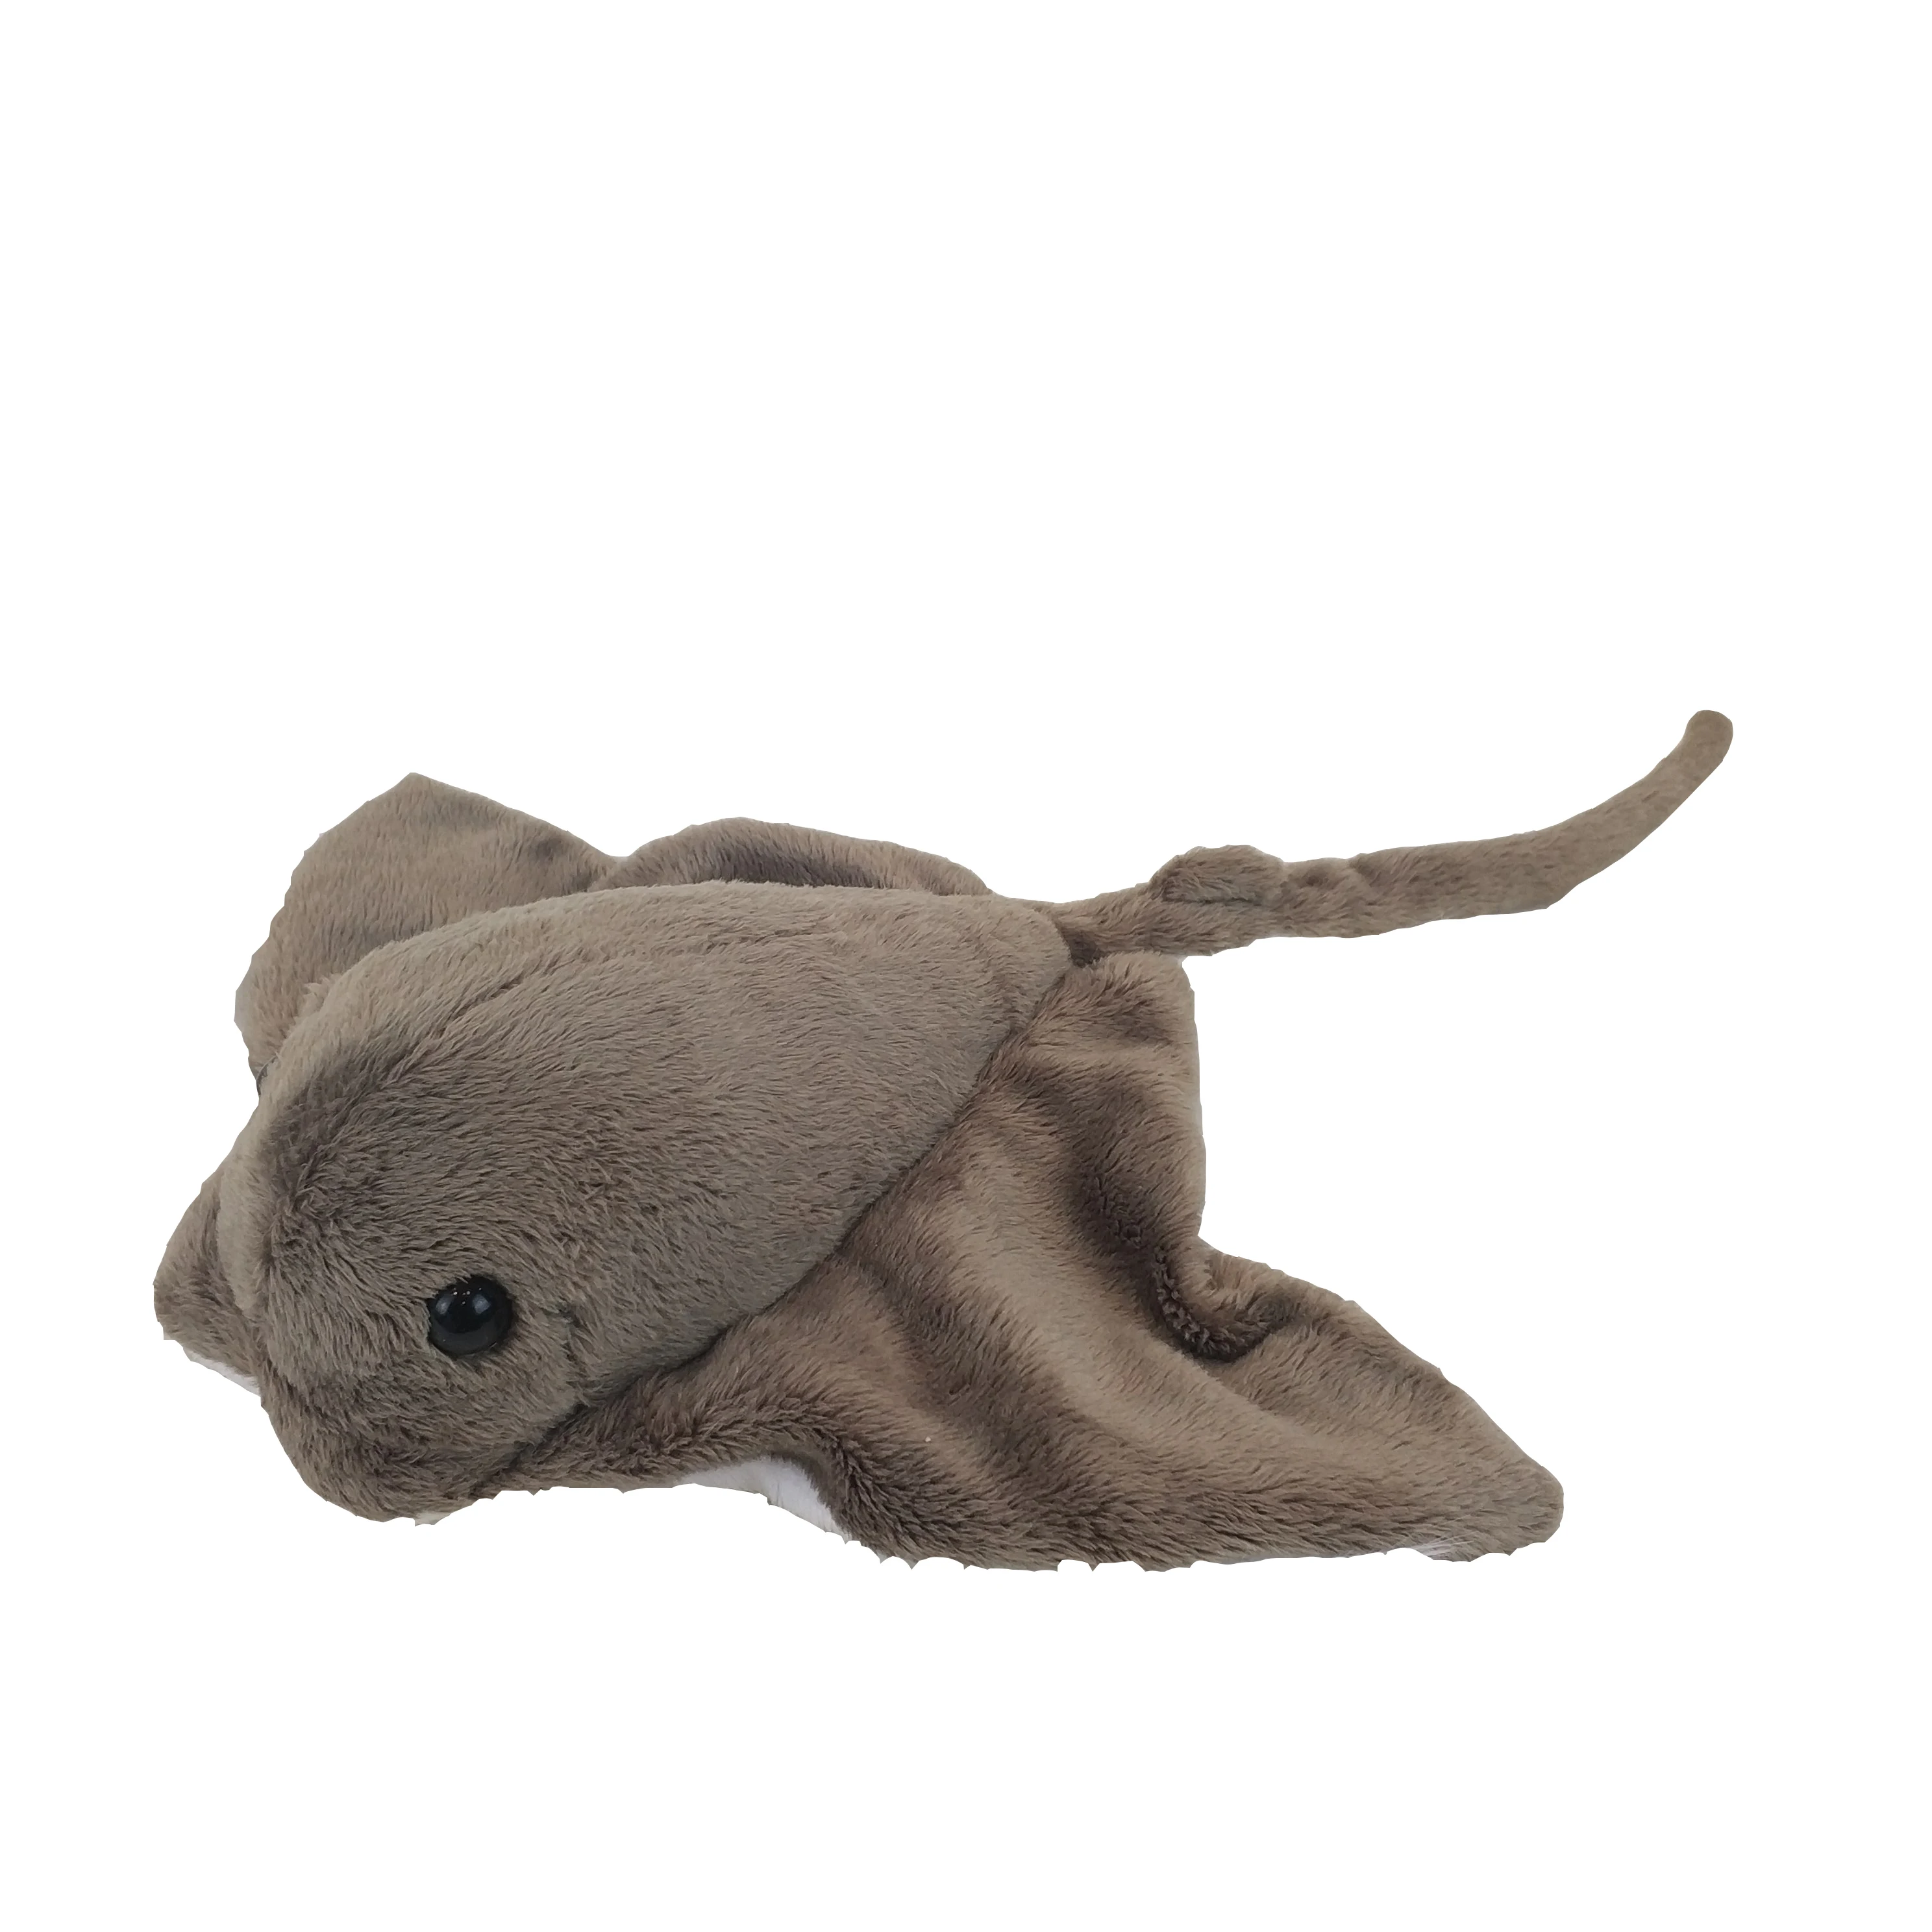 manta ray soft toy